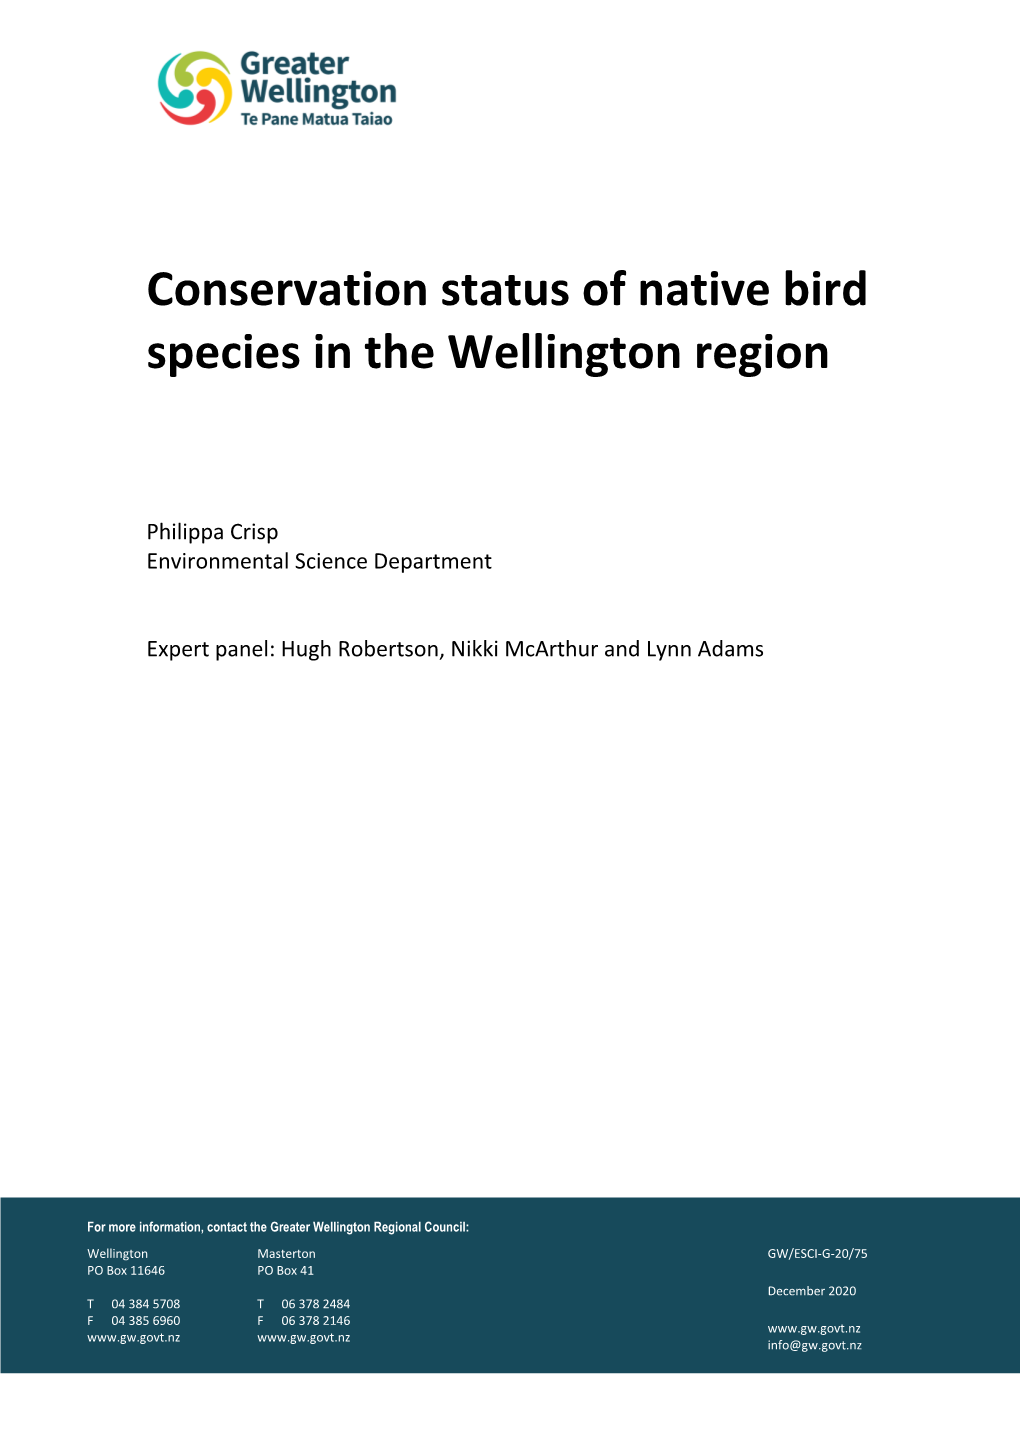 Conservation Status of Native Bird Species in the Wellington Region